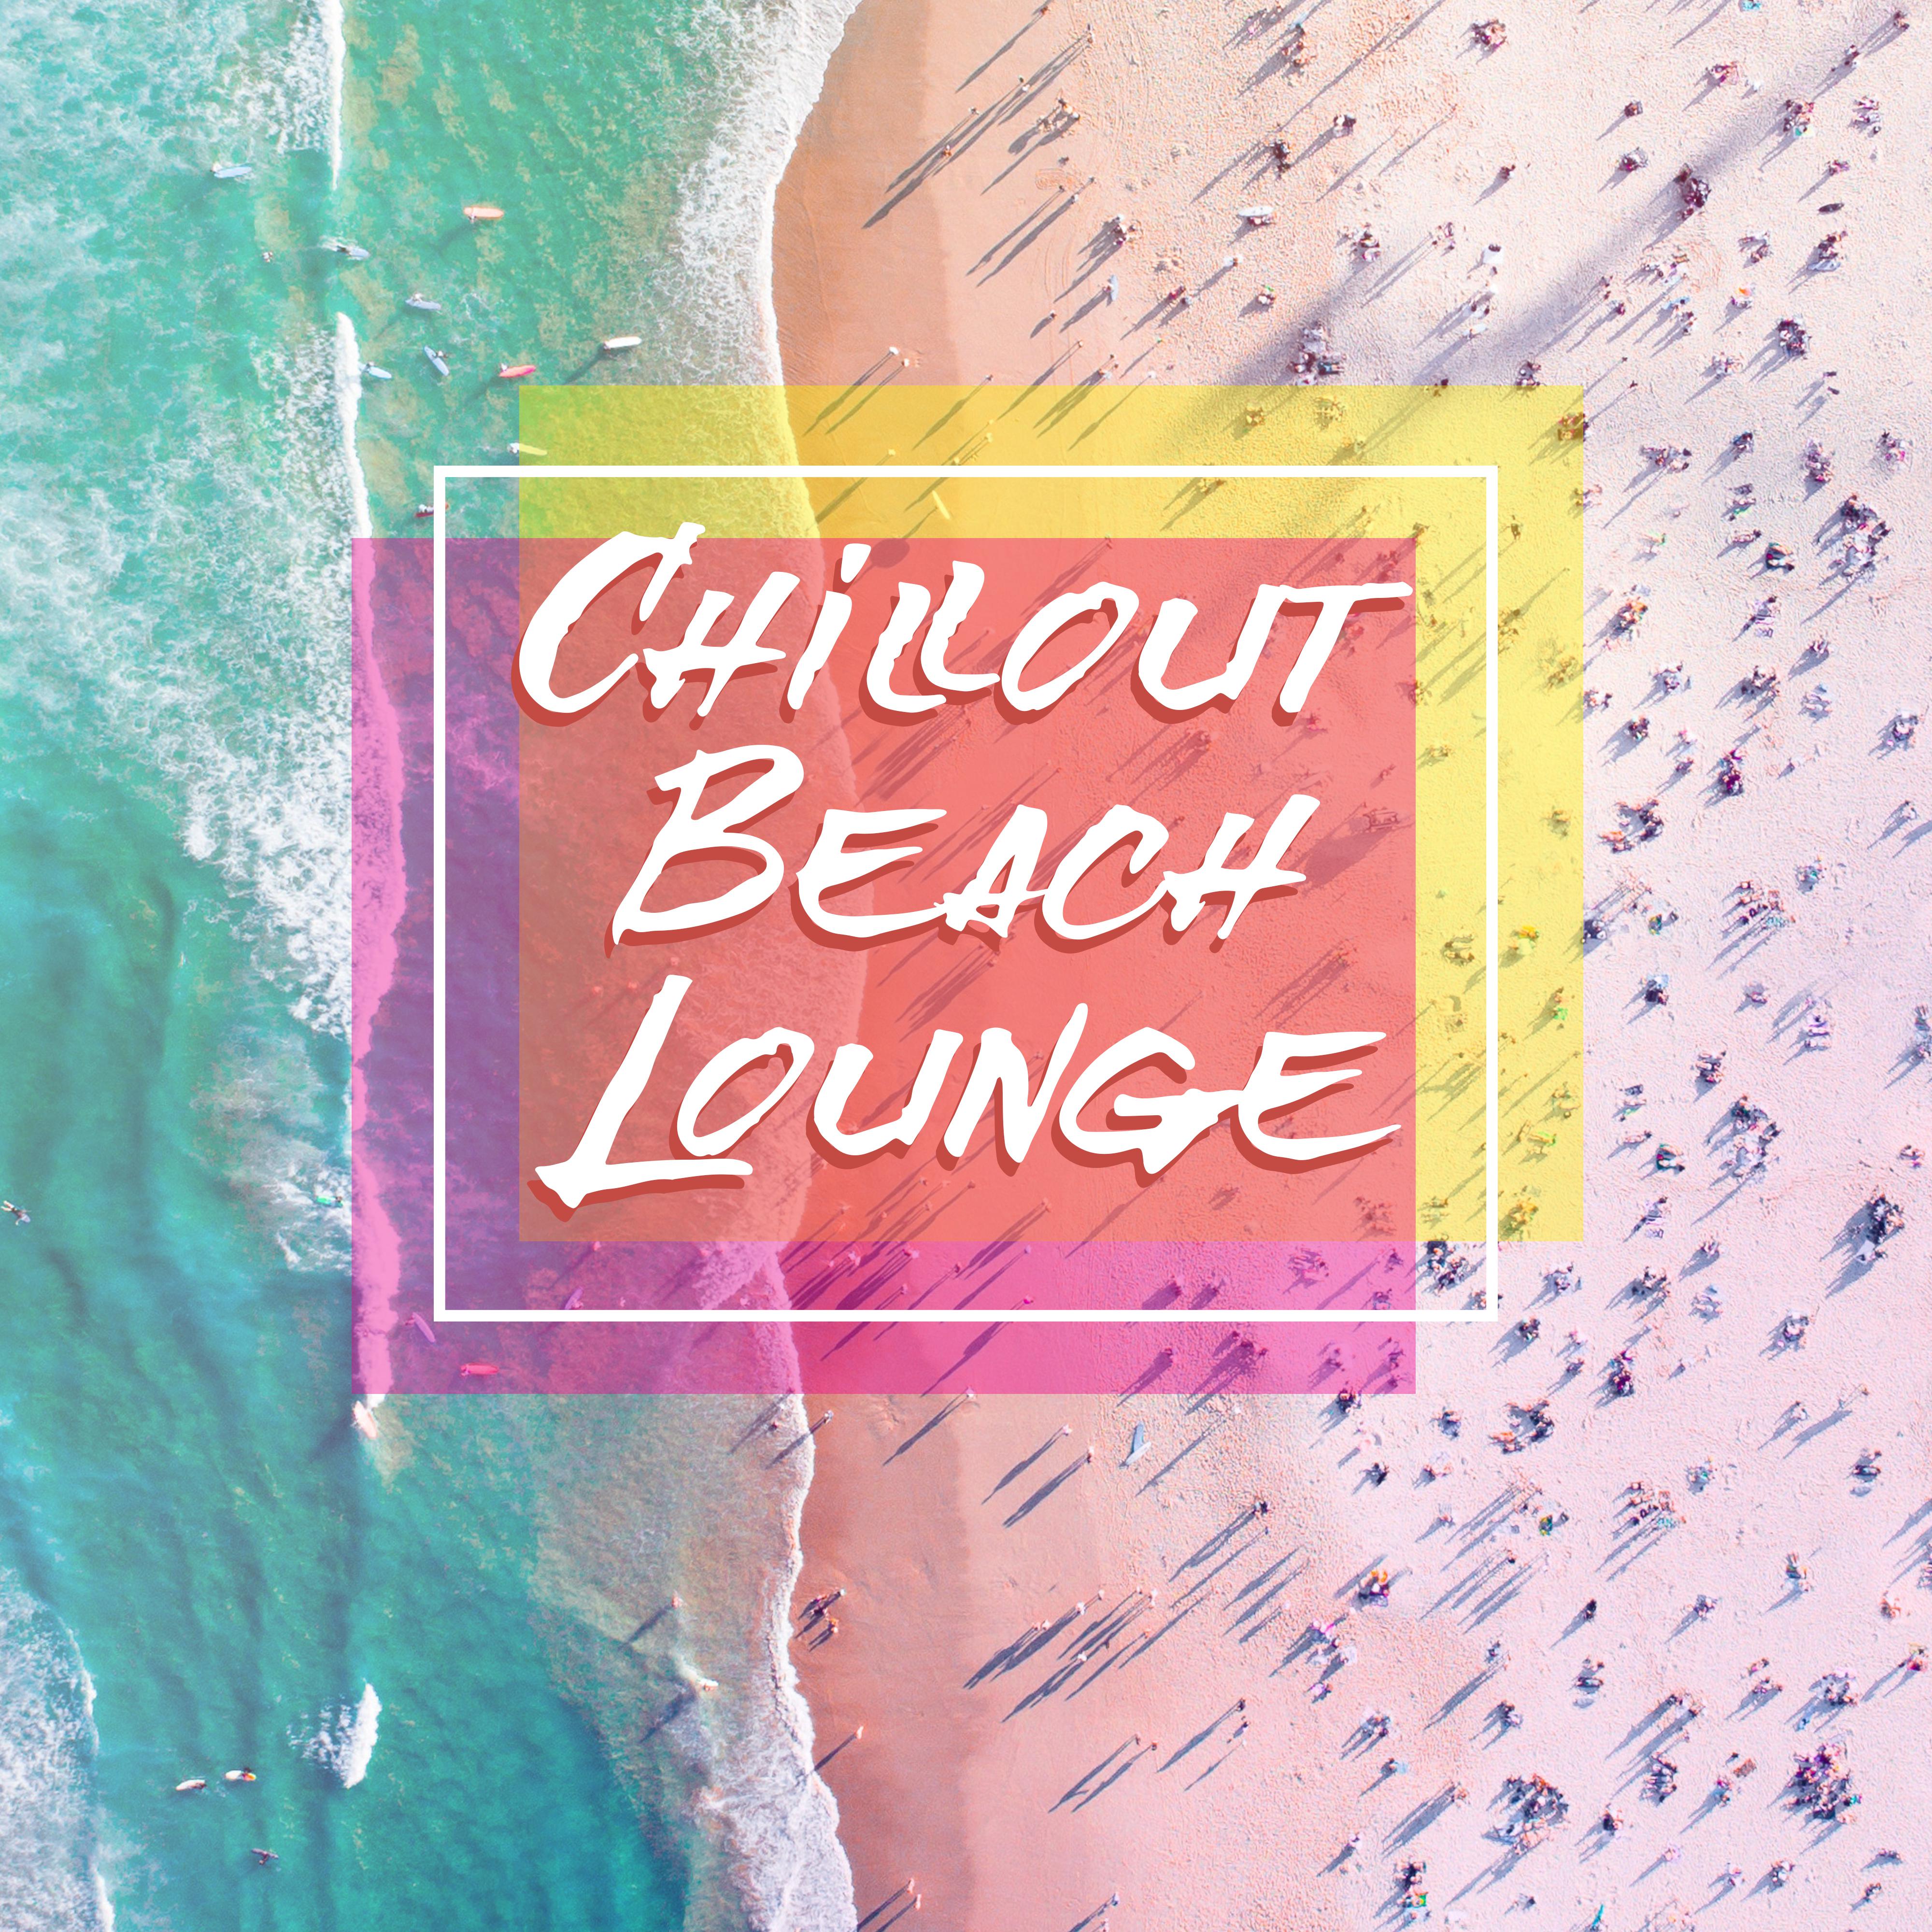 Chillout Beach Lounge